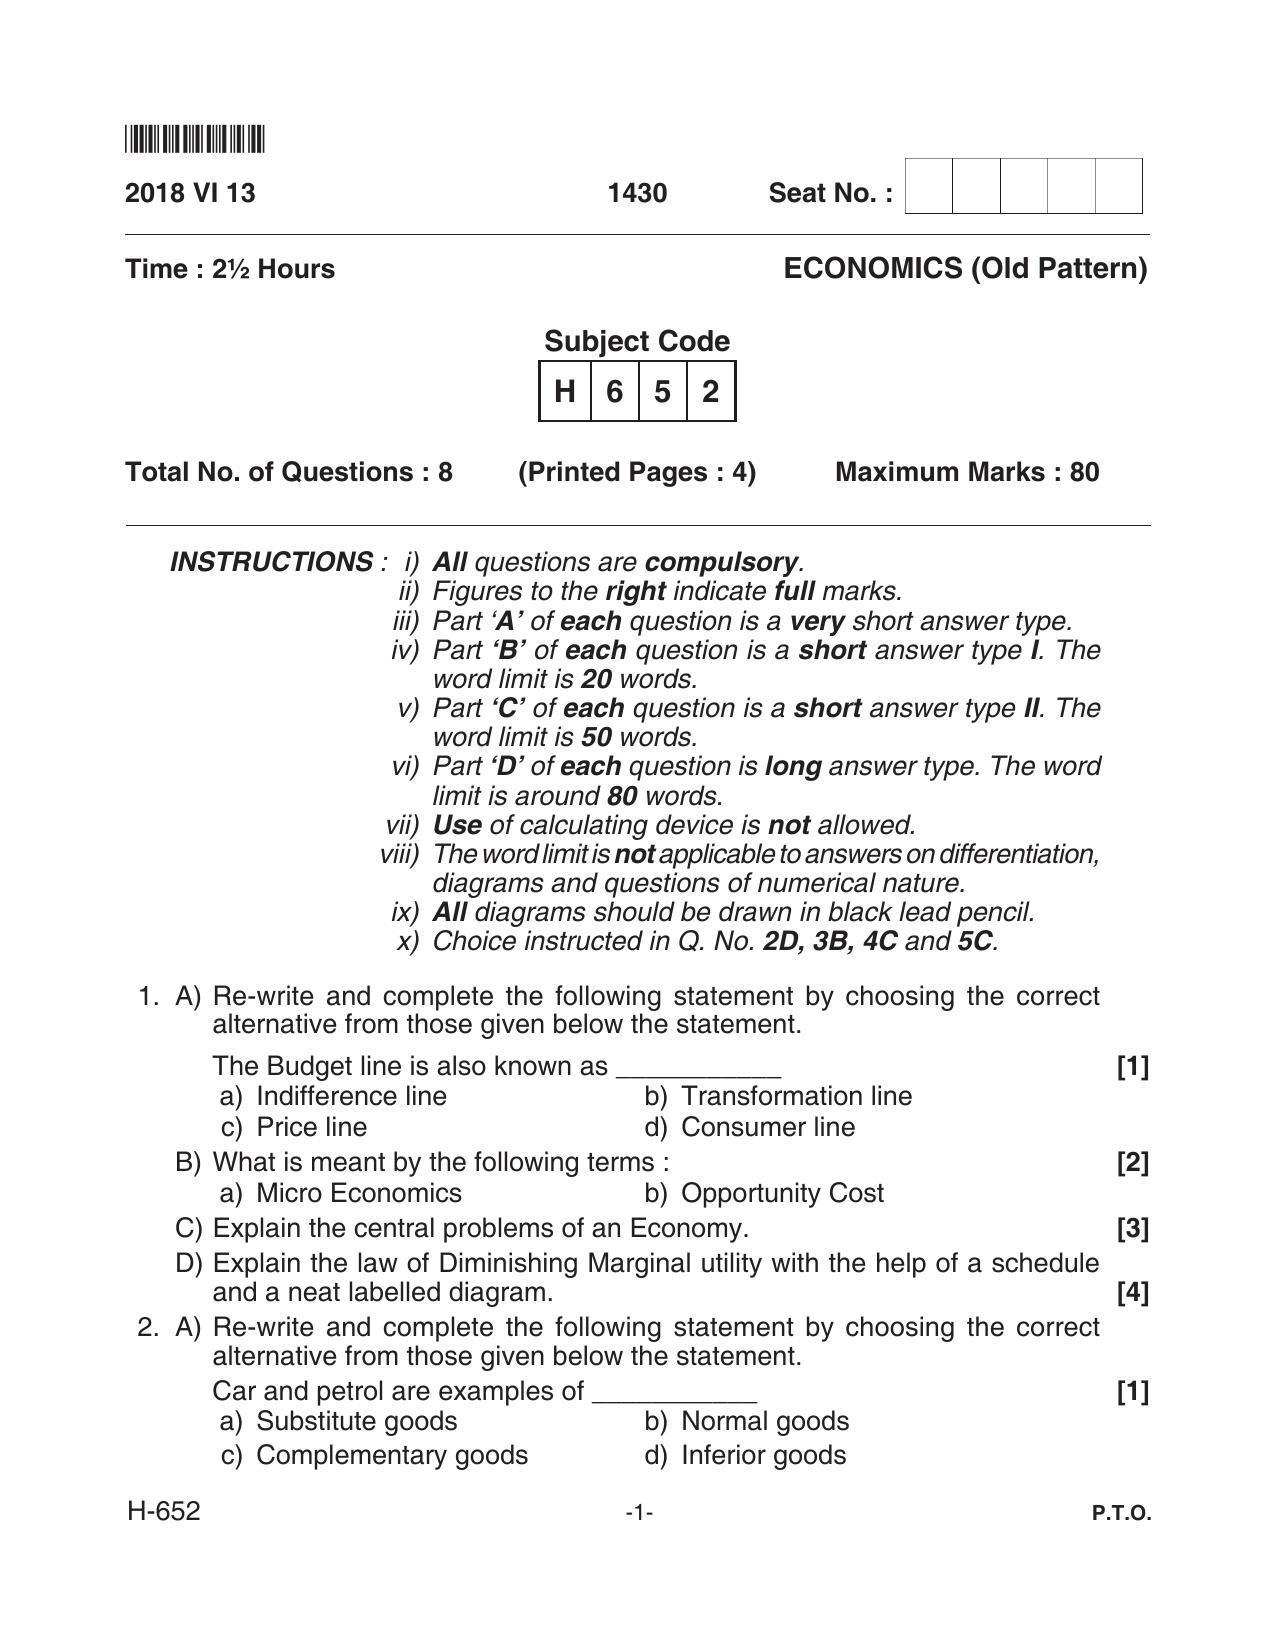 Goa Board Class 12 Economics  652 Old Pattern (June 2018) Question Paper - Page 1